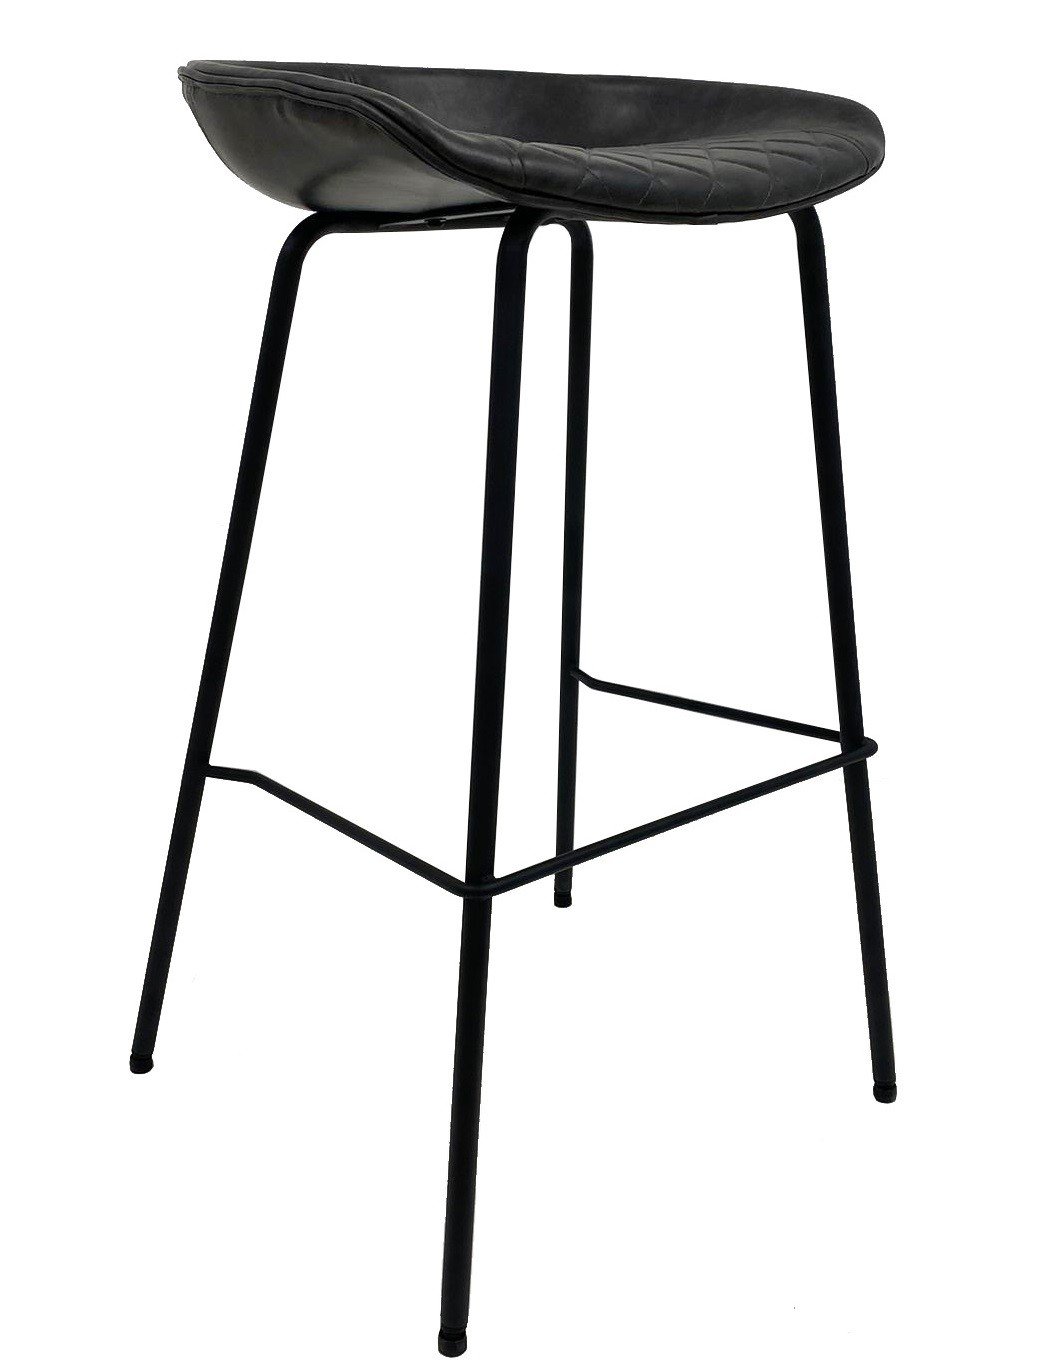 Taburete de diseño pata cromada asiento simil piel en blanco o negro